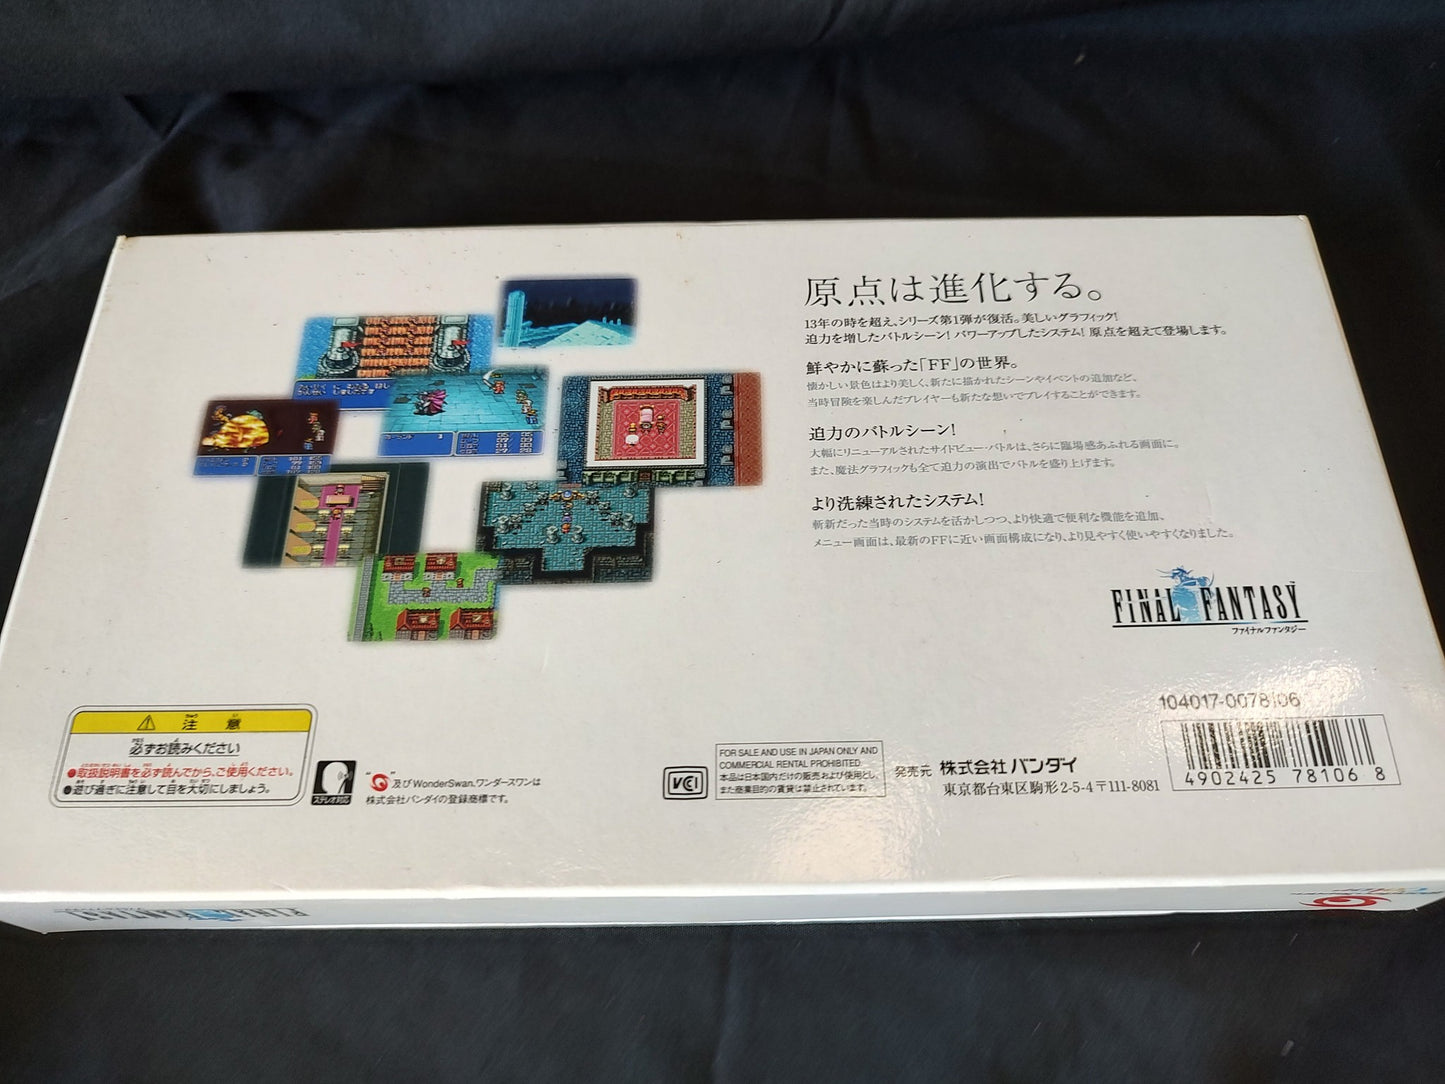 BANDAI Wonder Swan Color Final Fantasy Limited model console Boxes set-g0329-